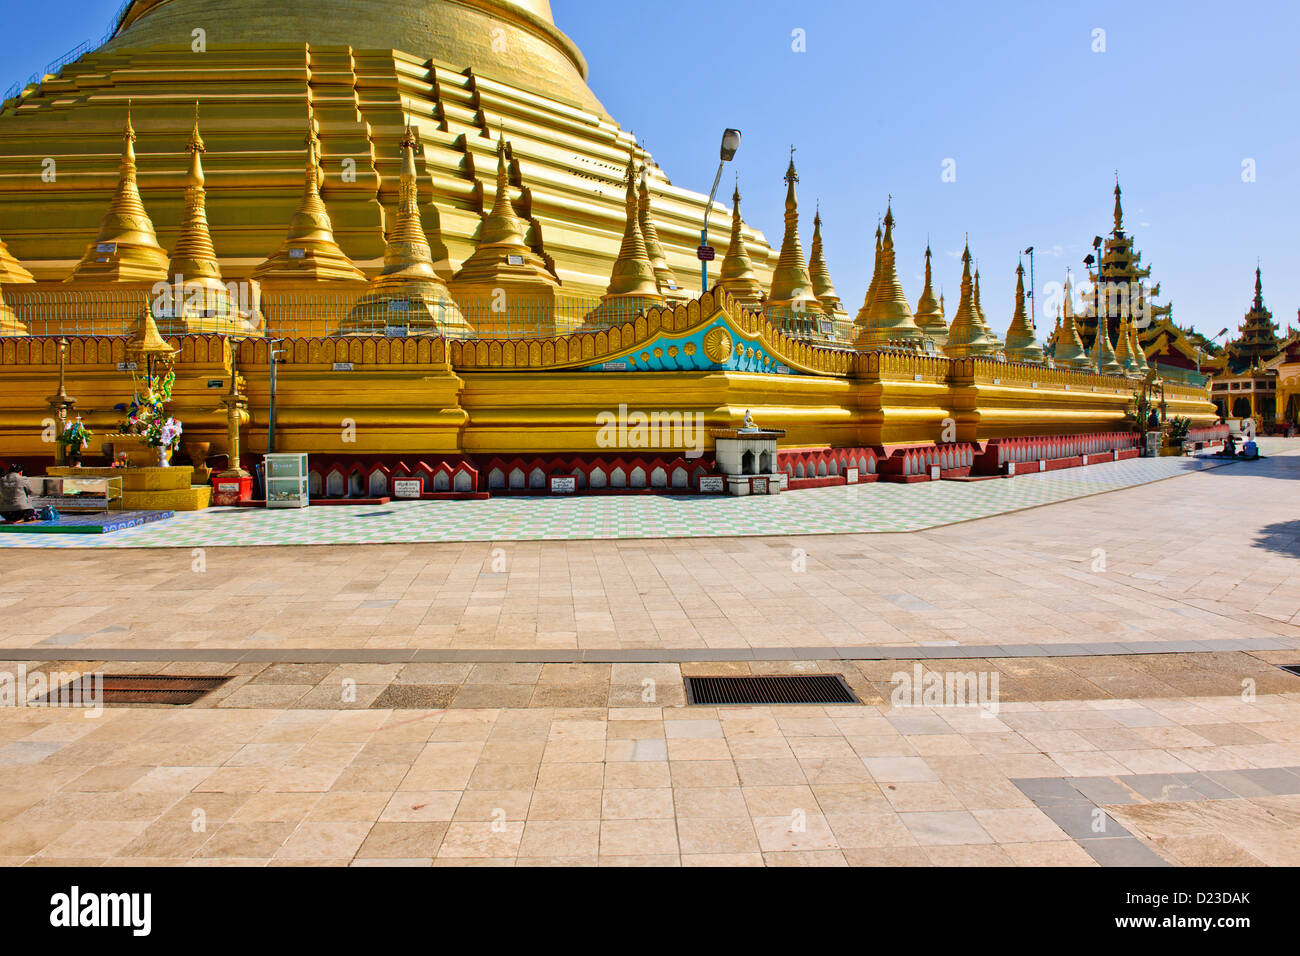 Buddha,Budda,il buddismo,birmano Pagoda Shwemawdaw,Paya,paese più alto Stupa,Bago (antica capitale del regno Mon),MYANMAR Birmania Foto Stock